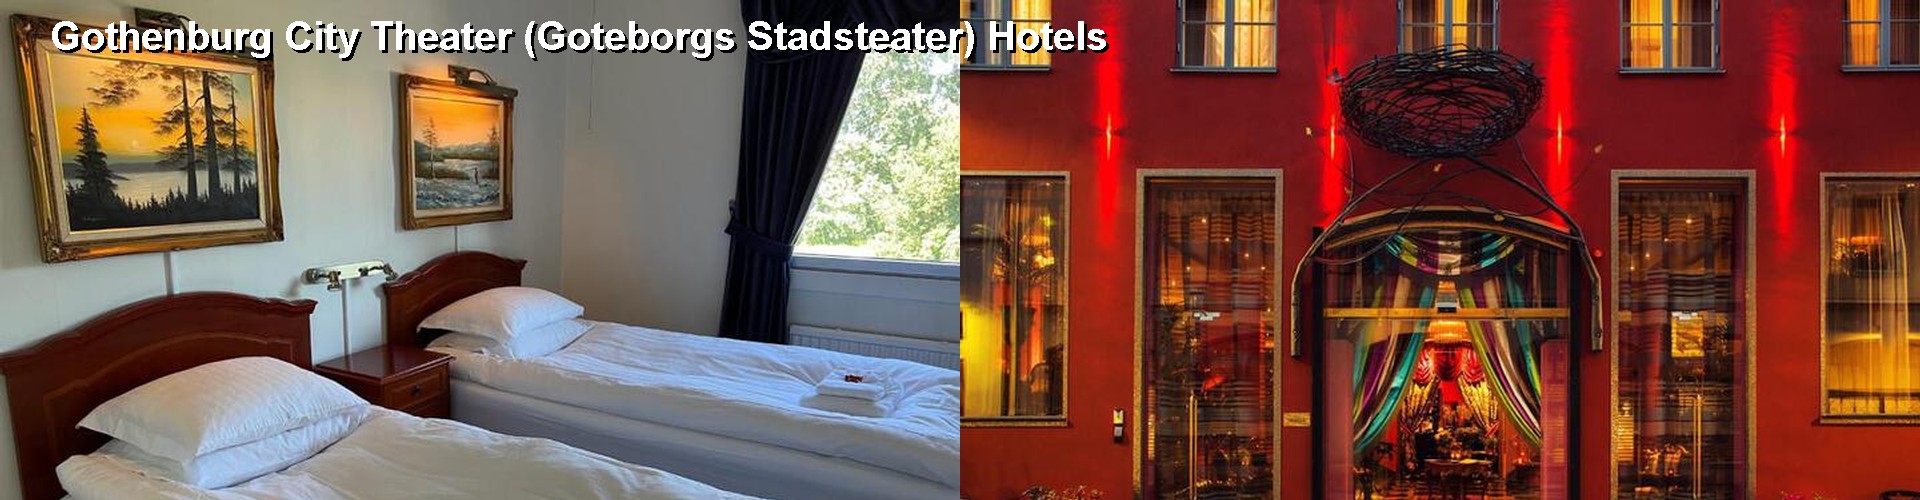 5 Best Hotels near Gothenburg City Theater (Goteborgs Stadsteater)